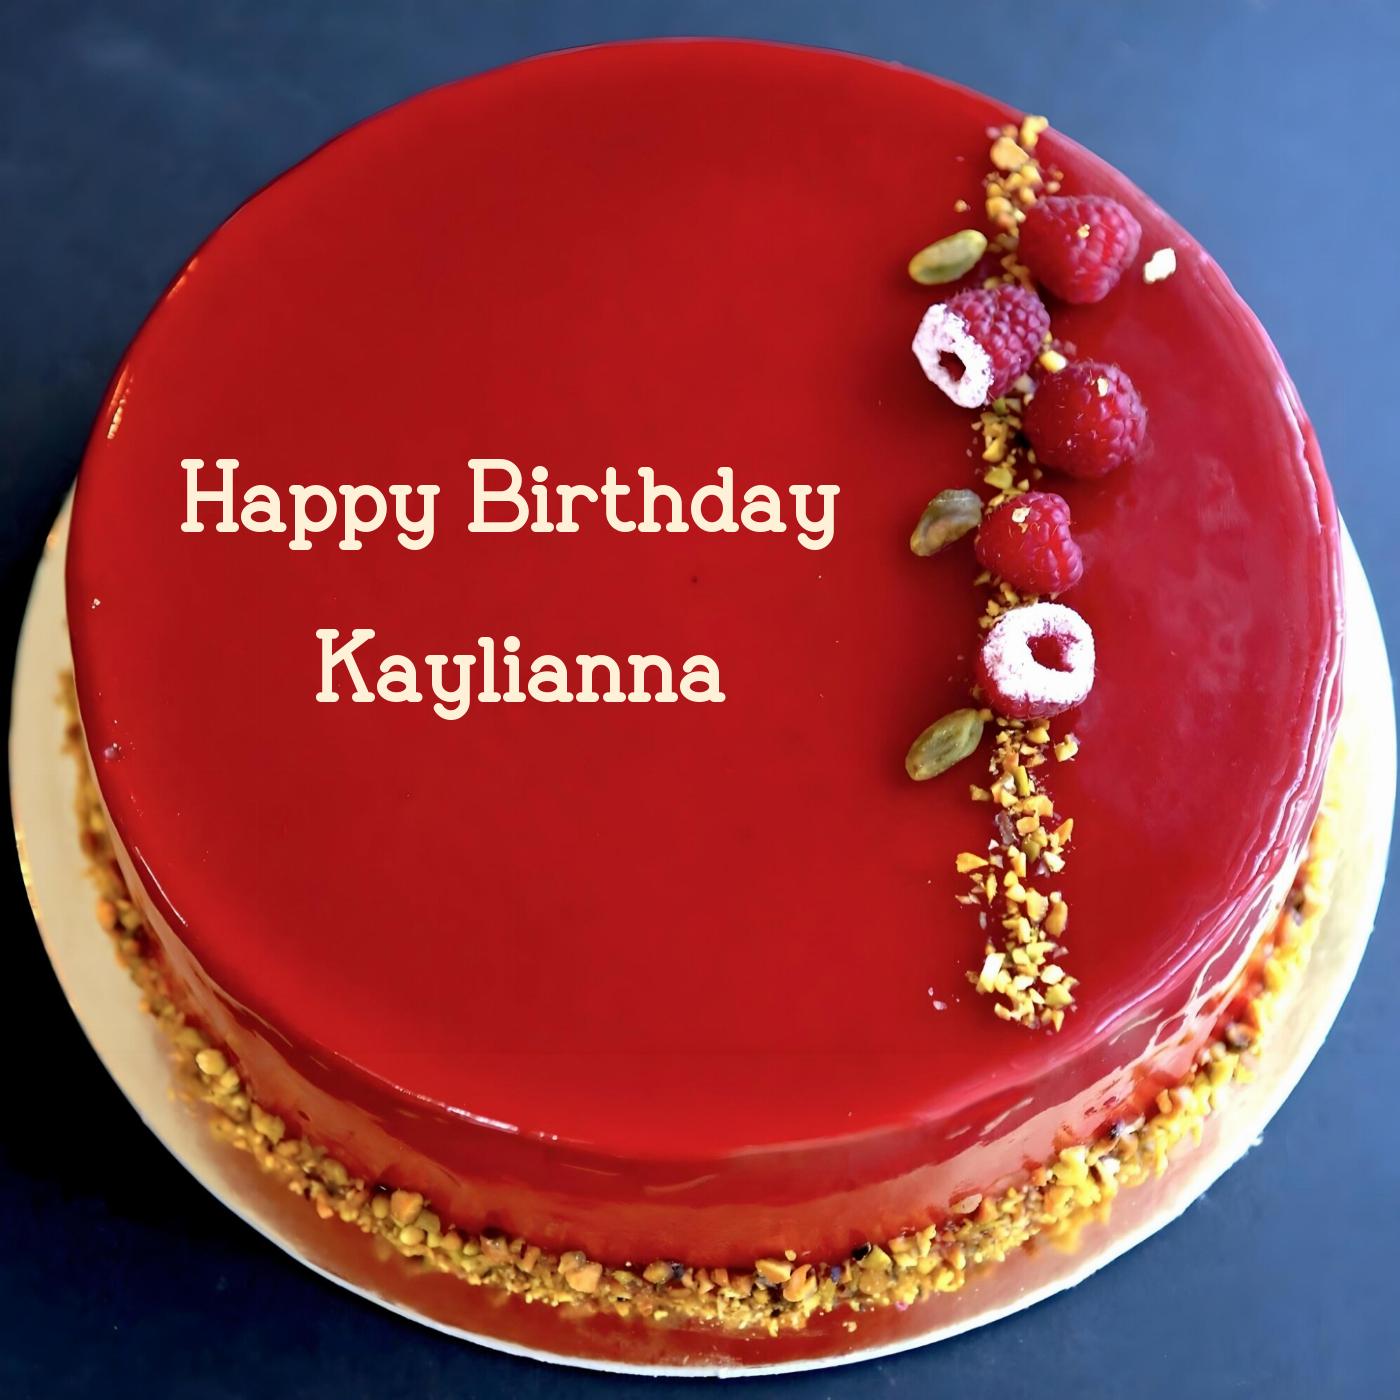 Happy Birthday Kaylianna Red Raspberry Cake